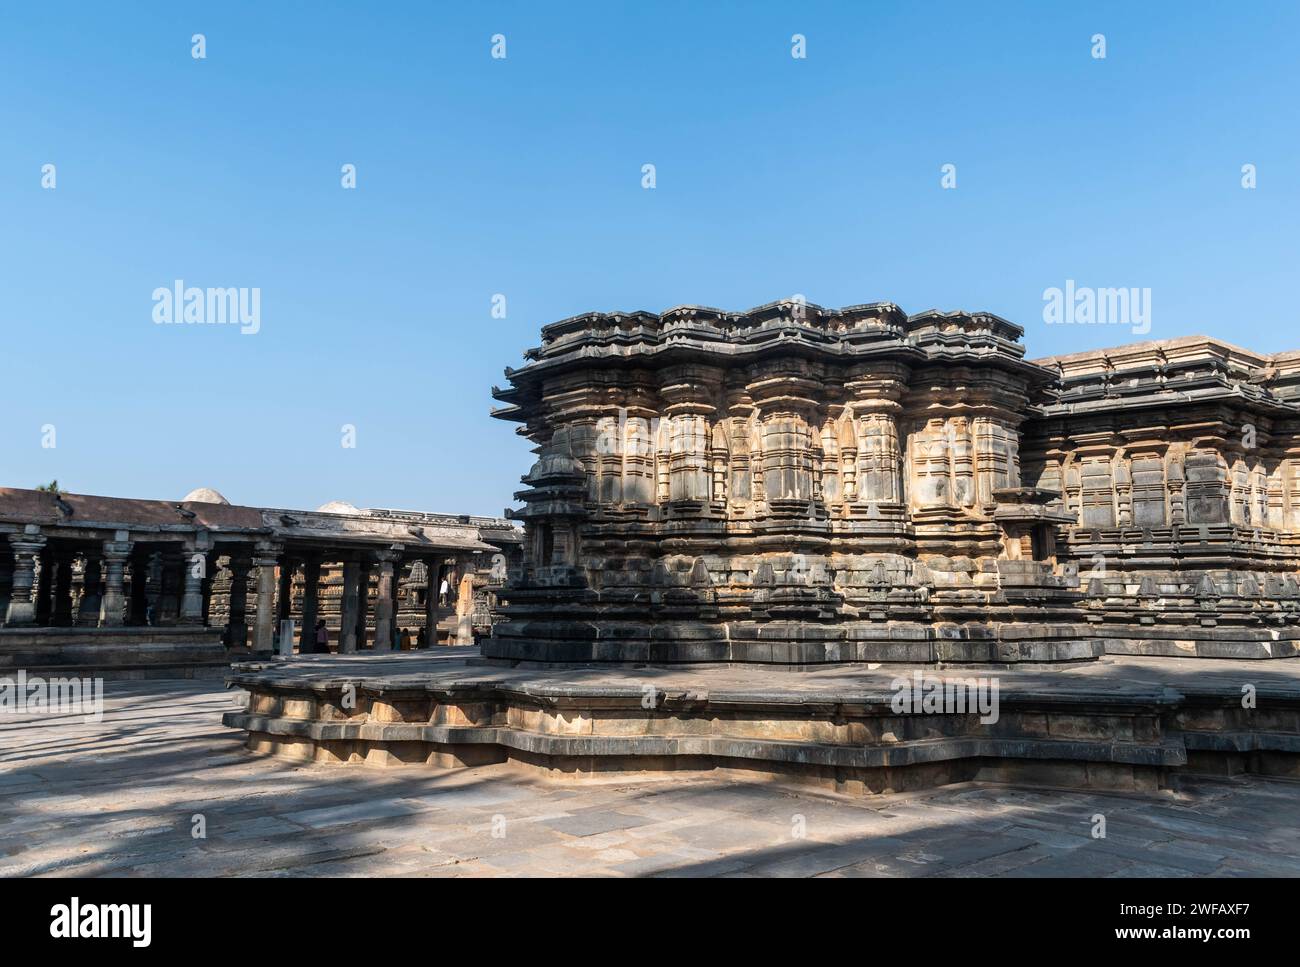 The ancient Hoysala era Chennakeshava temple in the town of Belur in Karnataka. Stock Photo